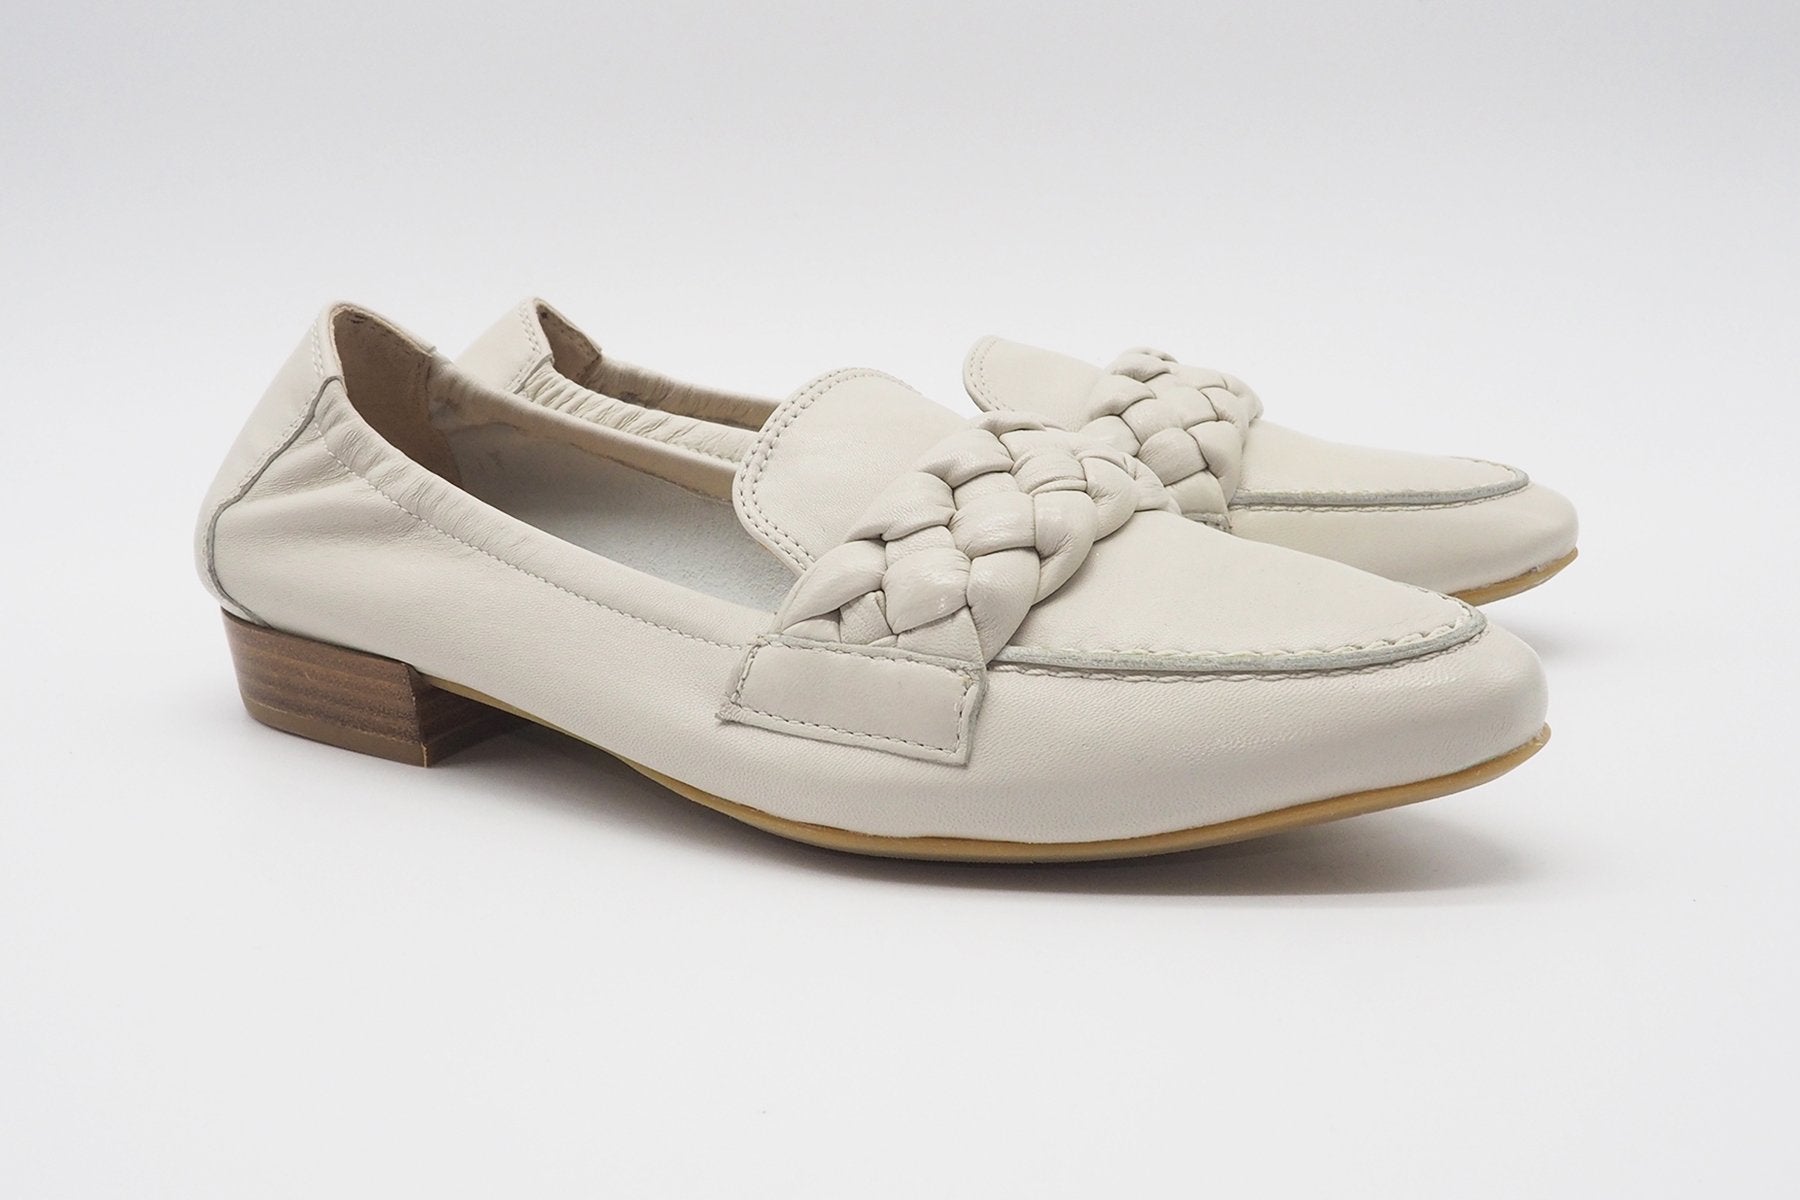 Damen Loafer mit Flechdetail - Nappaleder in Offwhite Damen Loafers Donna Carolina